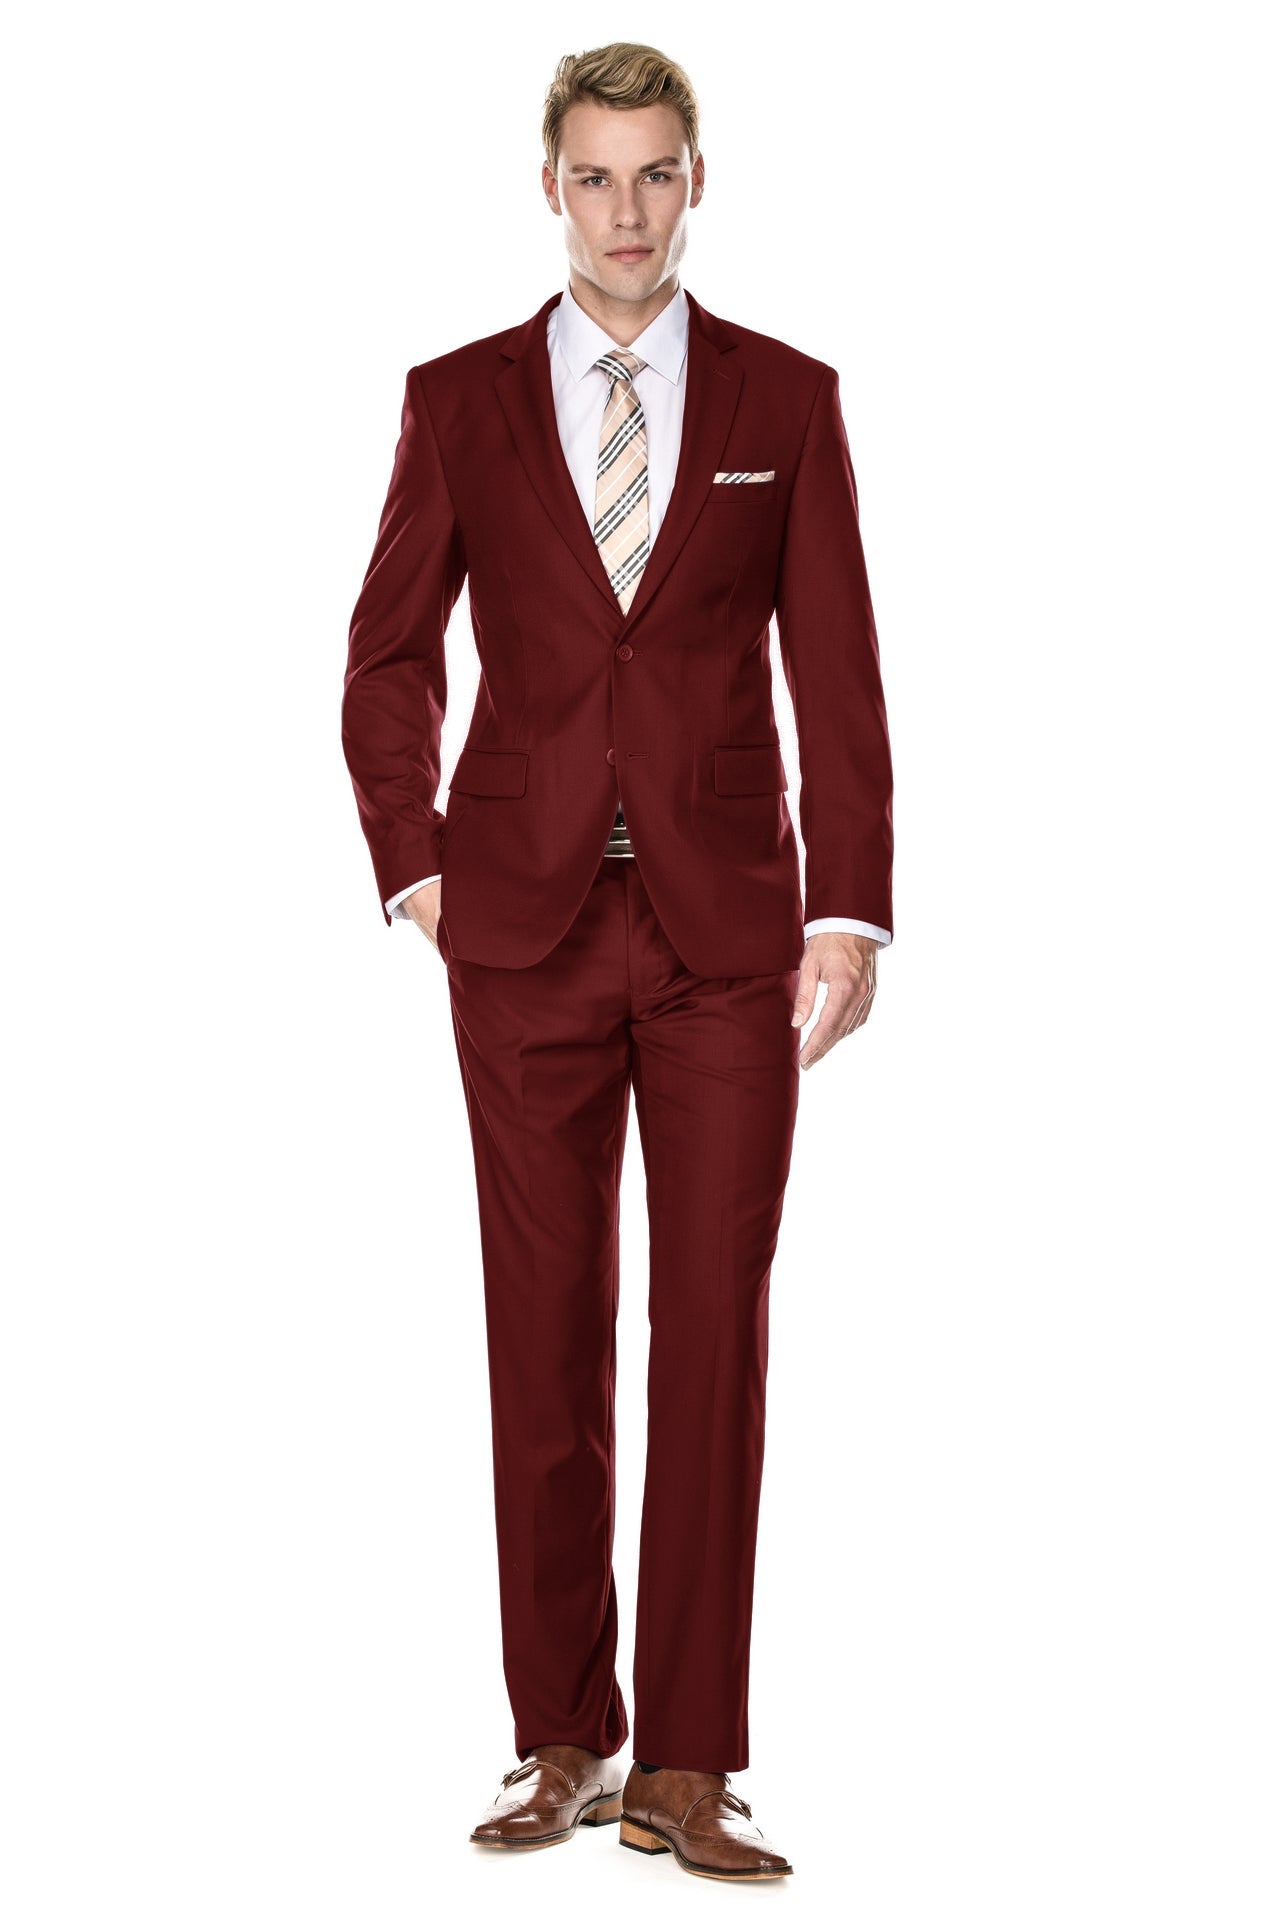 Premium Two Piece Suit for Men, Office Suit, Formal Suit, Wedding Suit,  Party Suit, Casual Suit with Free Matching Tie -  Portugal